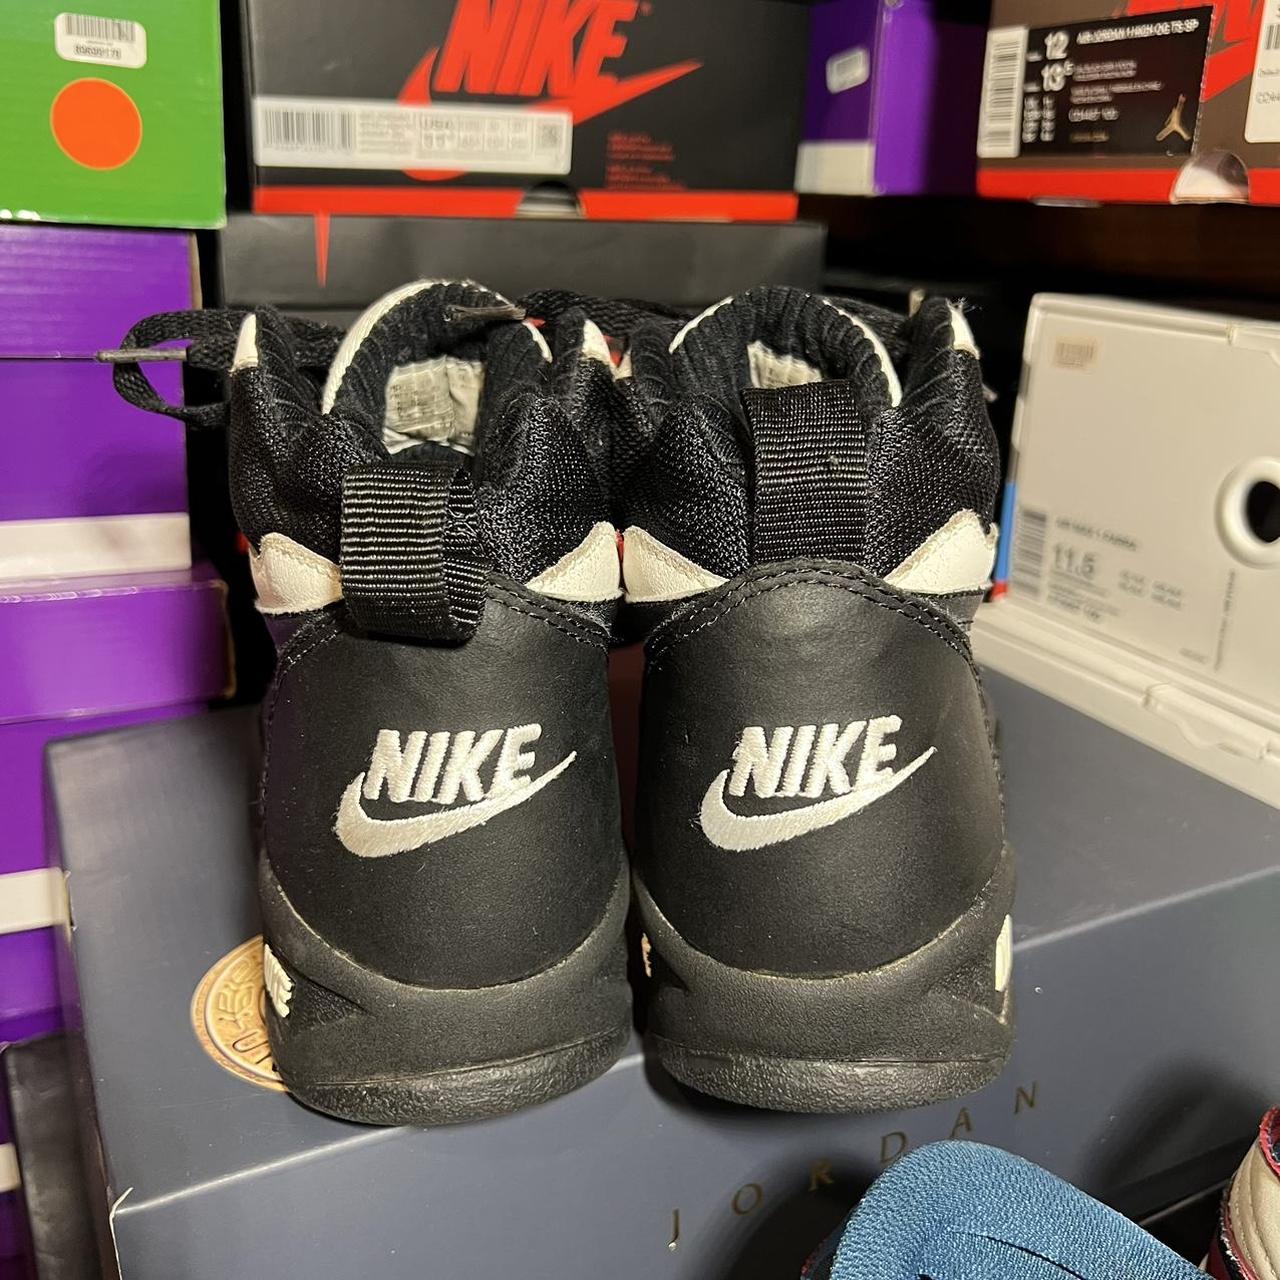 Vintage 1992 Nike Air raid basketball shoes. These - Depop